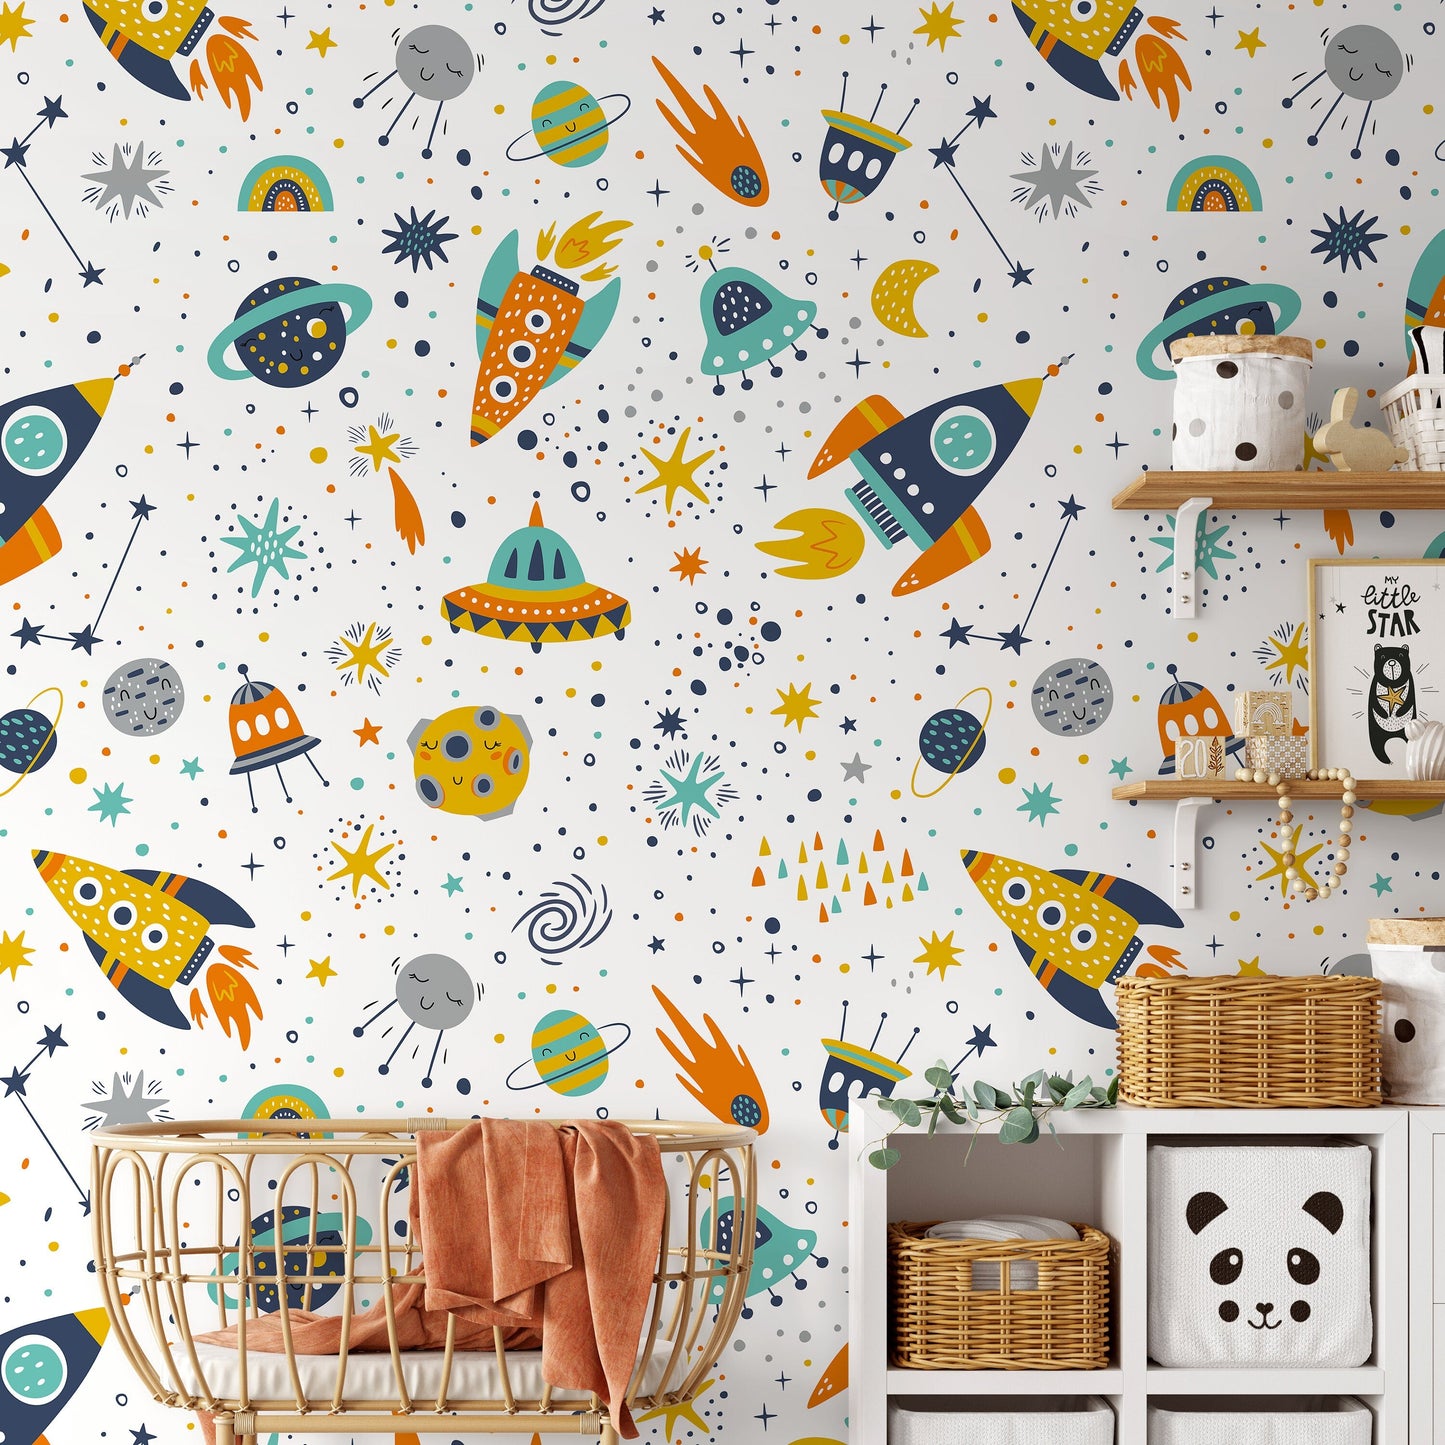 Nursery Space Removable Wallpaper Temporary Wallpaper, Minimalistic Wallpaper, Peel and Stick Wallpaper - B524